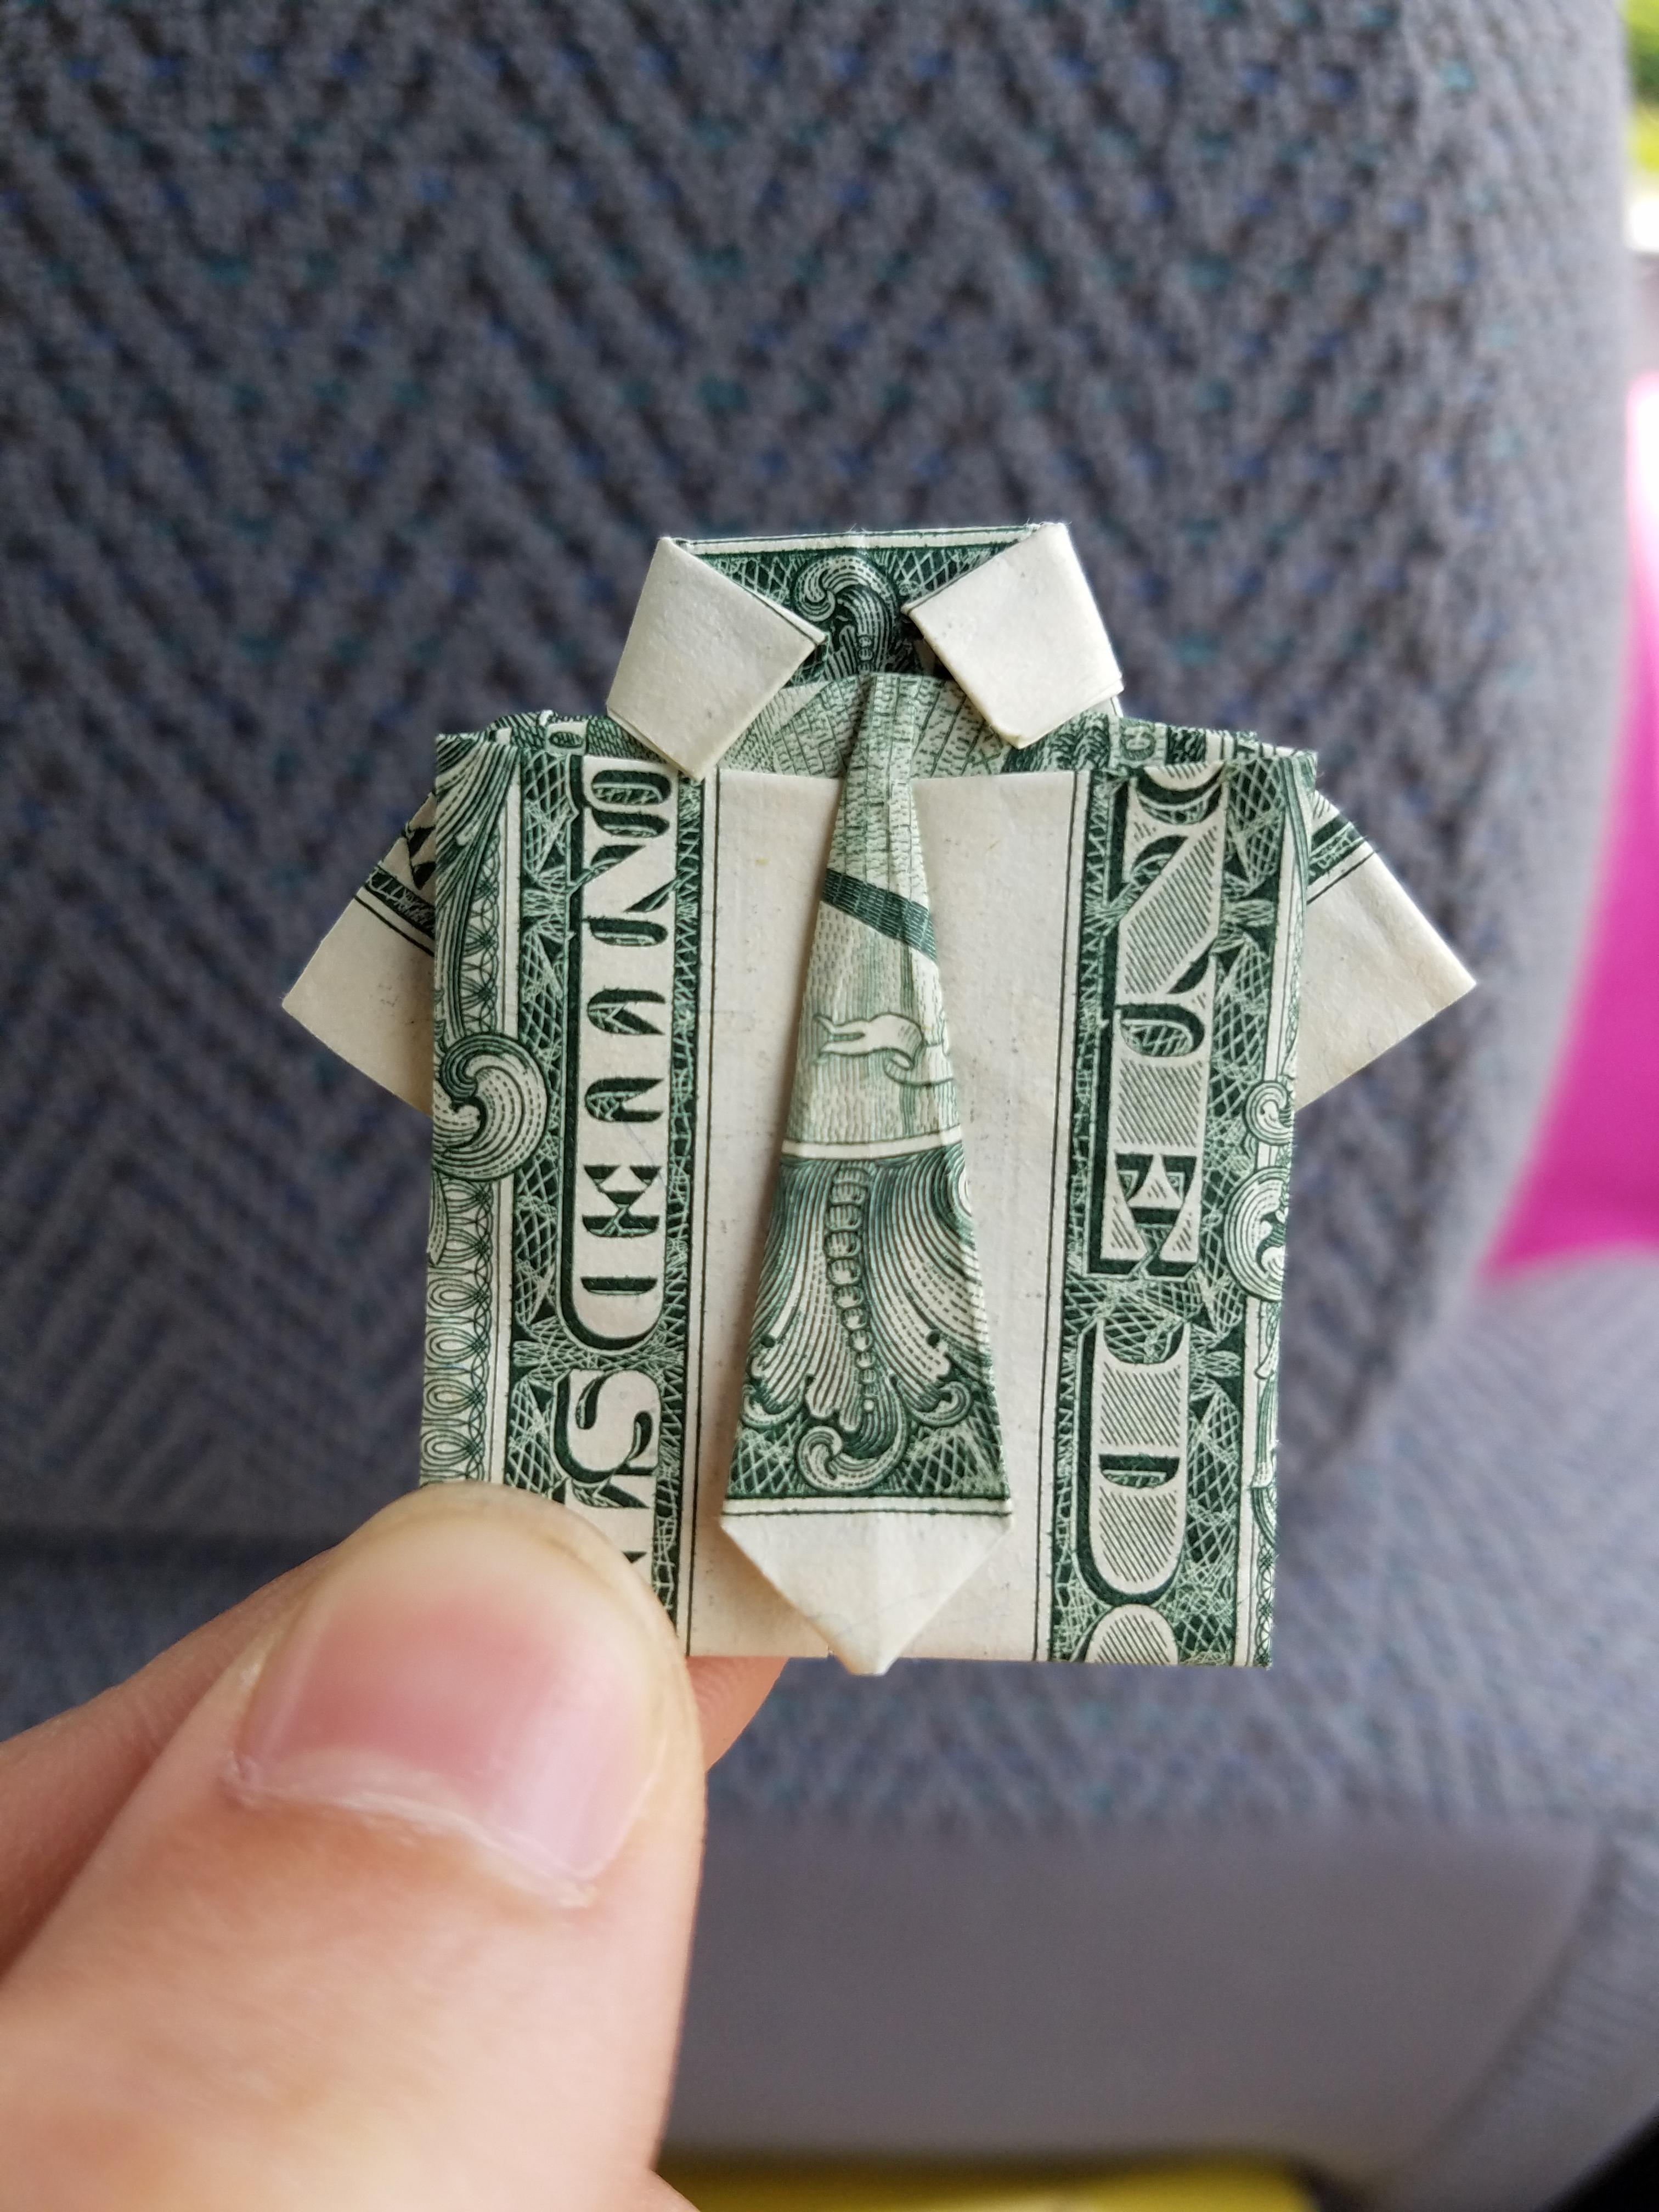 Dollar Bill Origami Shirt With Tie This 1 Dollar Bill Folded Like A Shirt And Tie Mildlyinteresting